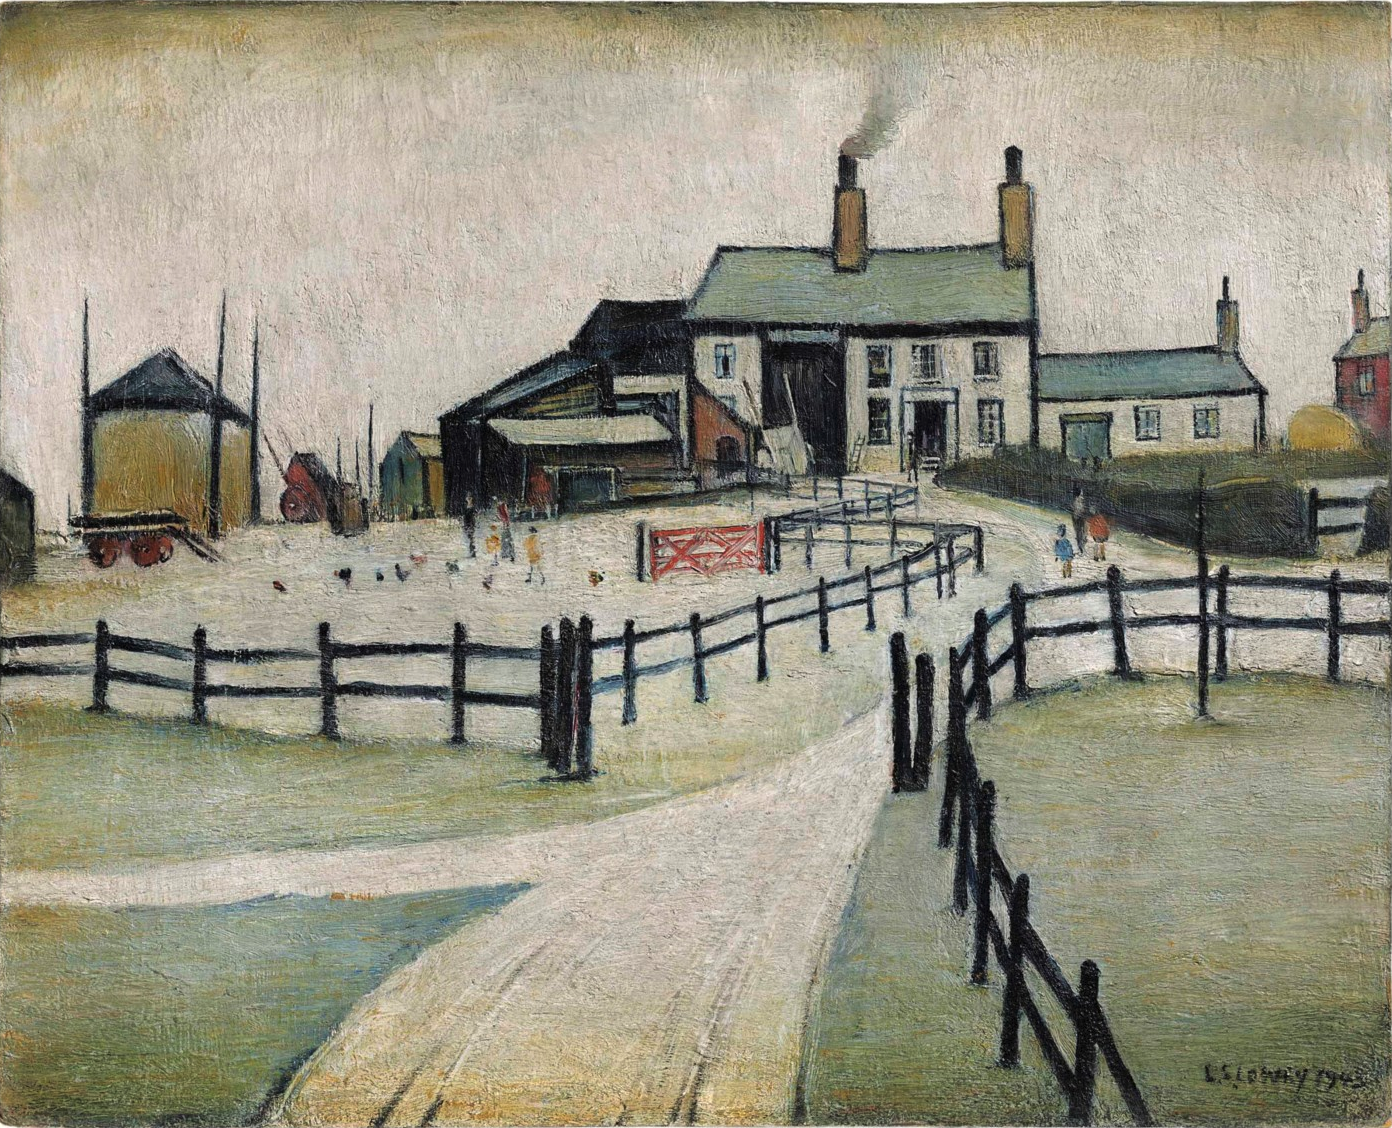 A Lancashire farm (1943) by Laurence Stephen Lowry (1887 - 1976), English artist.